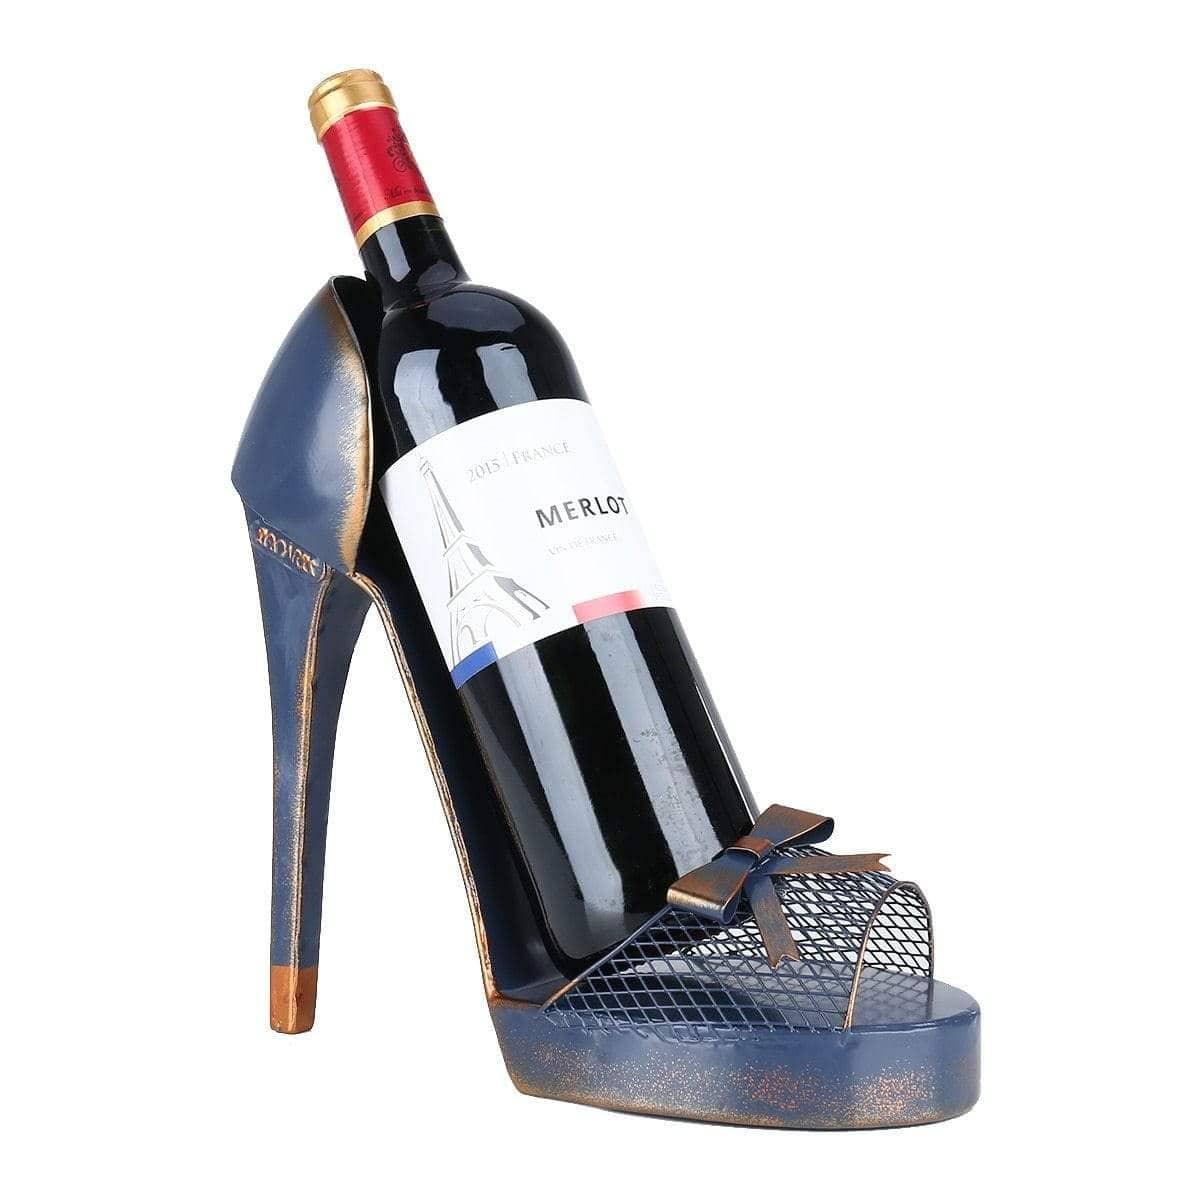 High Heel Wine Stand: Elegant and Stylish Wine Storage for Fashionistas